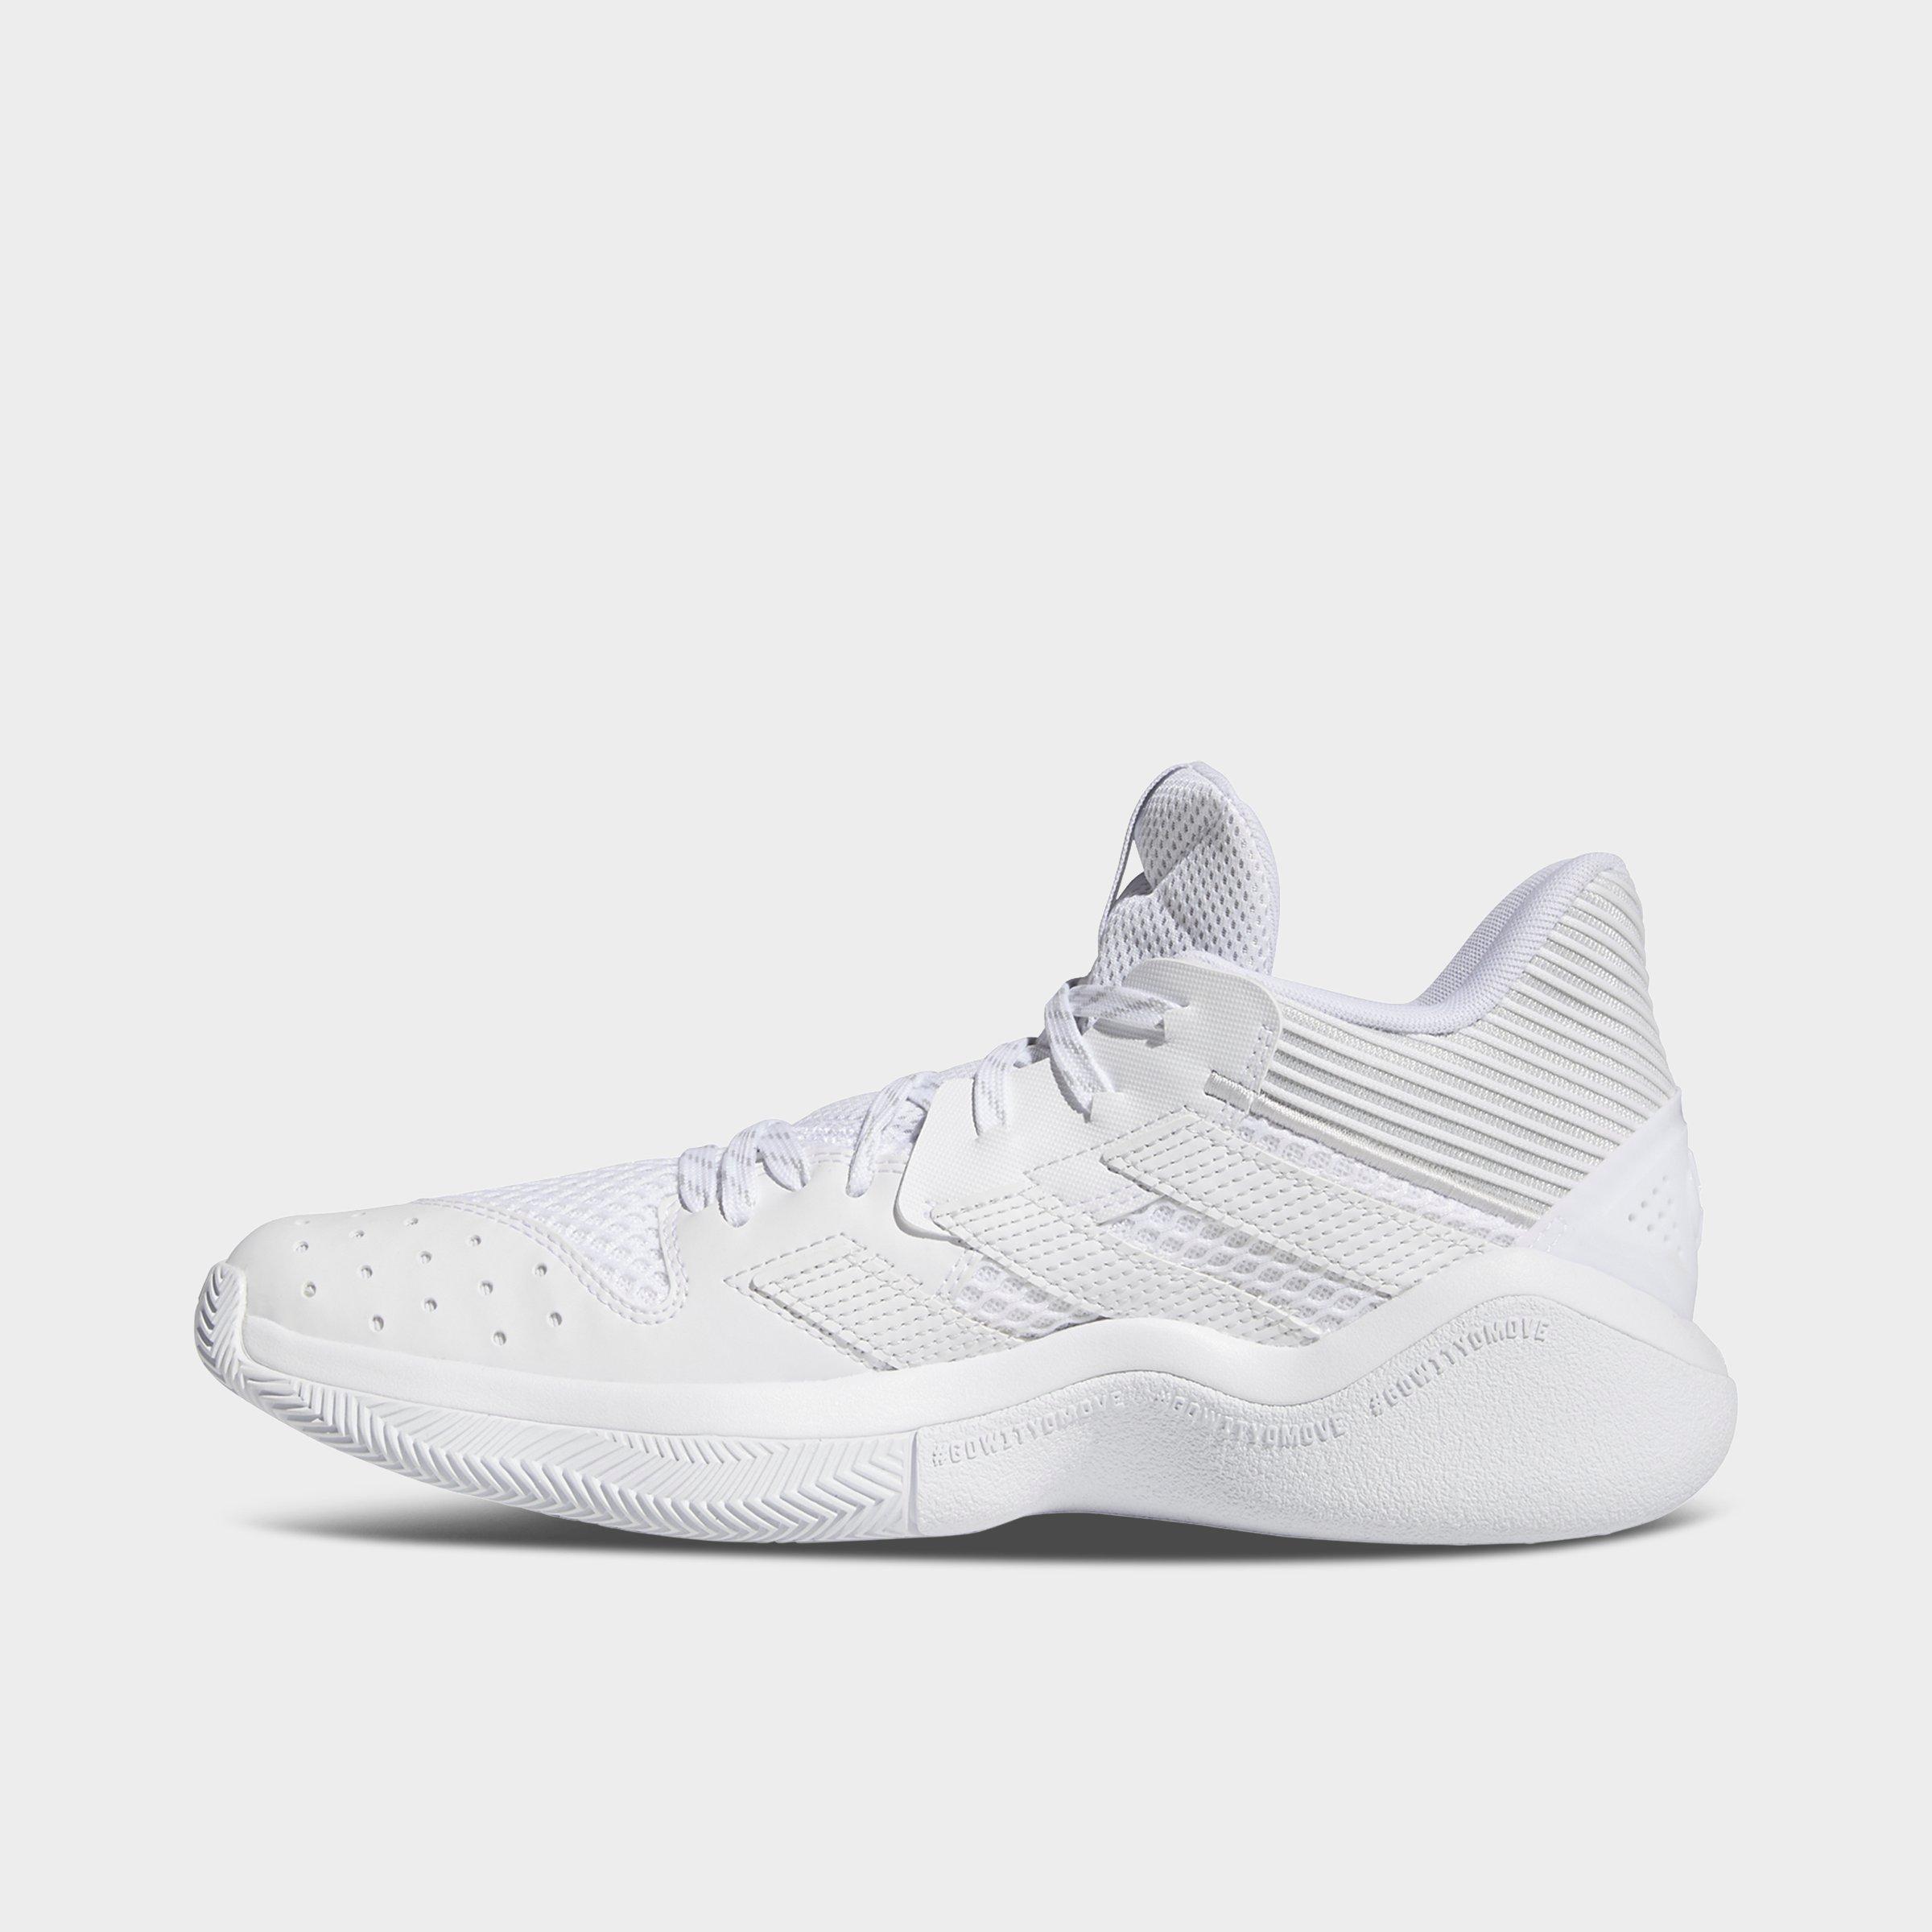 harden white basketball shoes